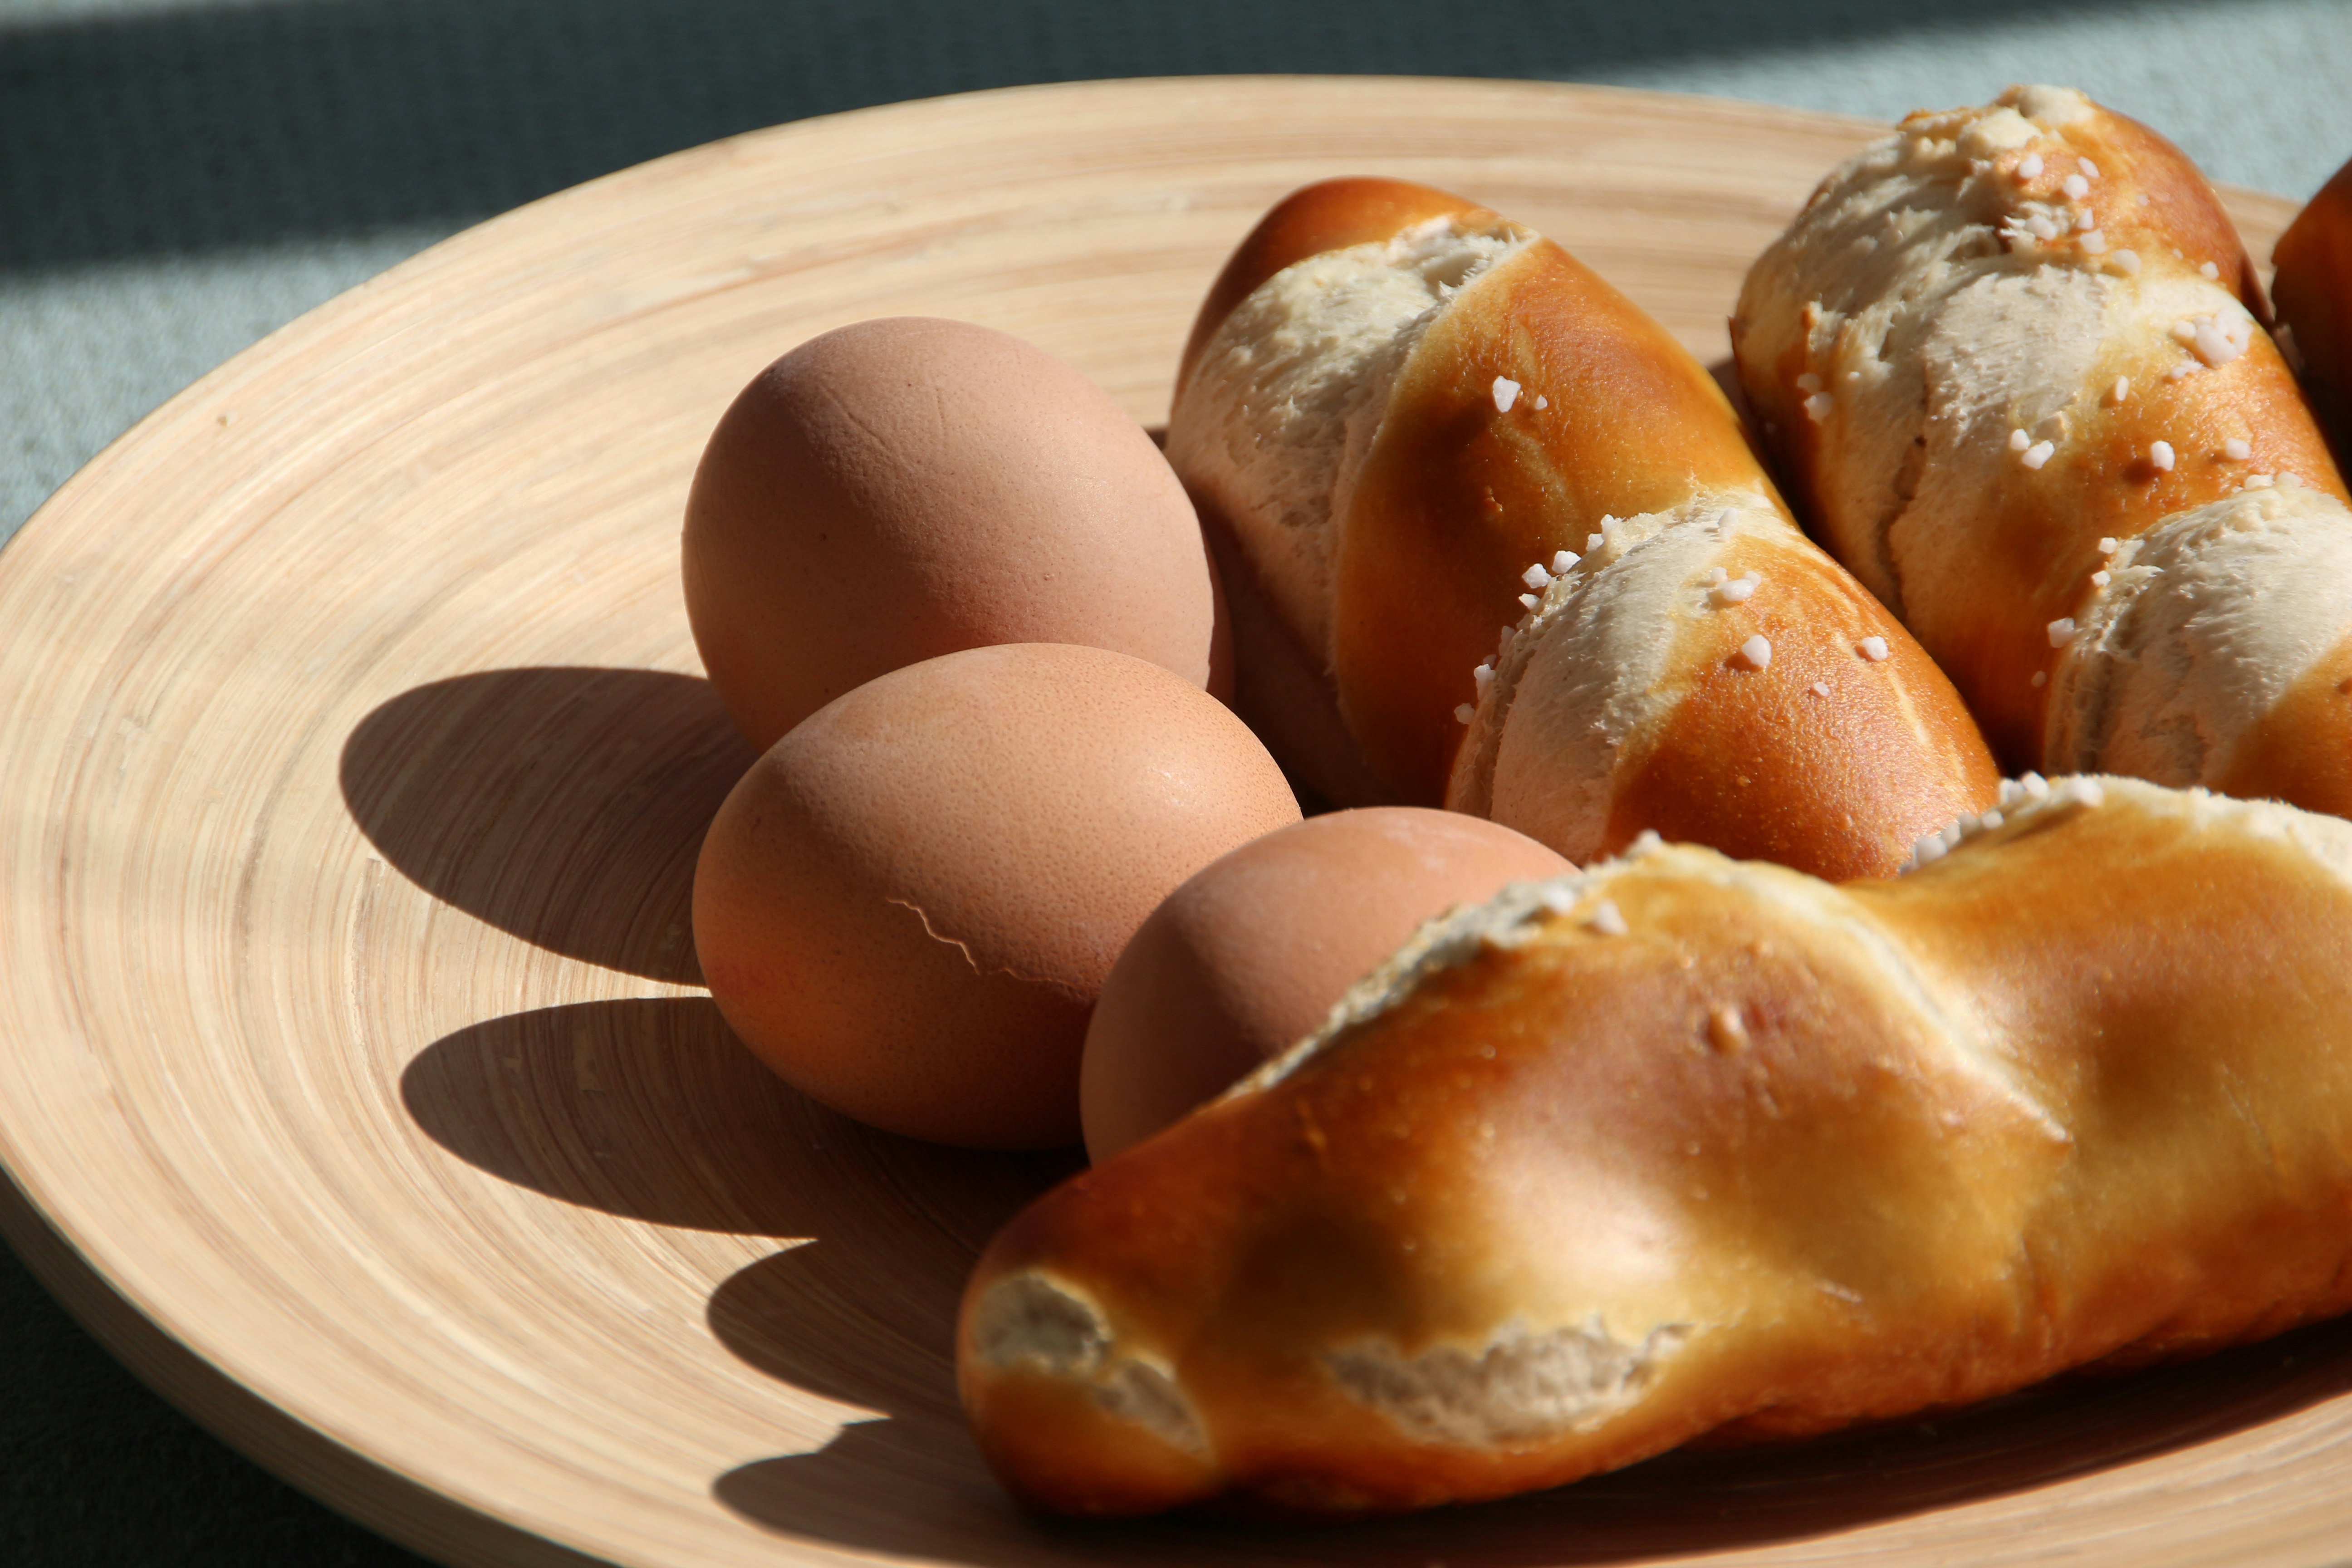 three organic eggs and three breads